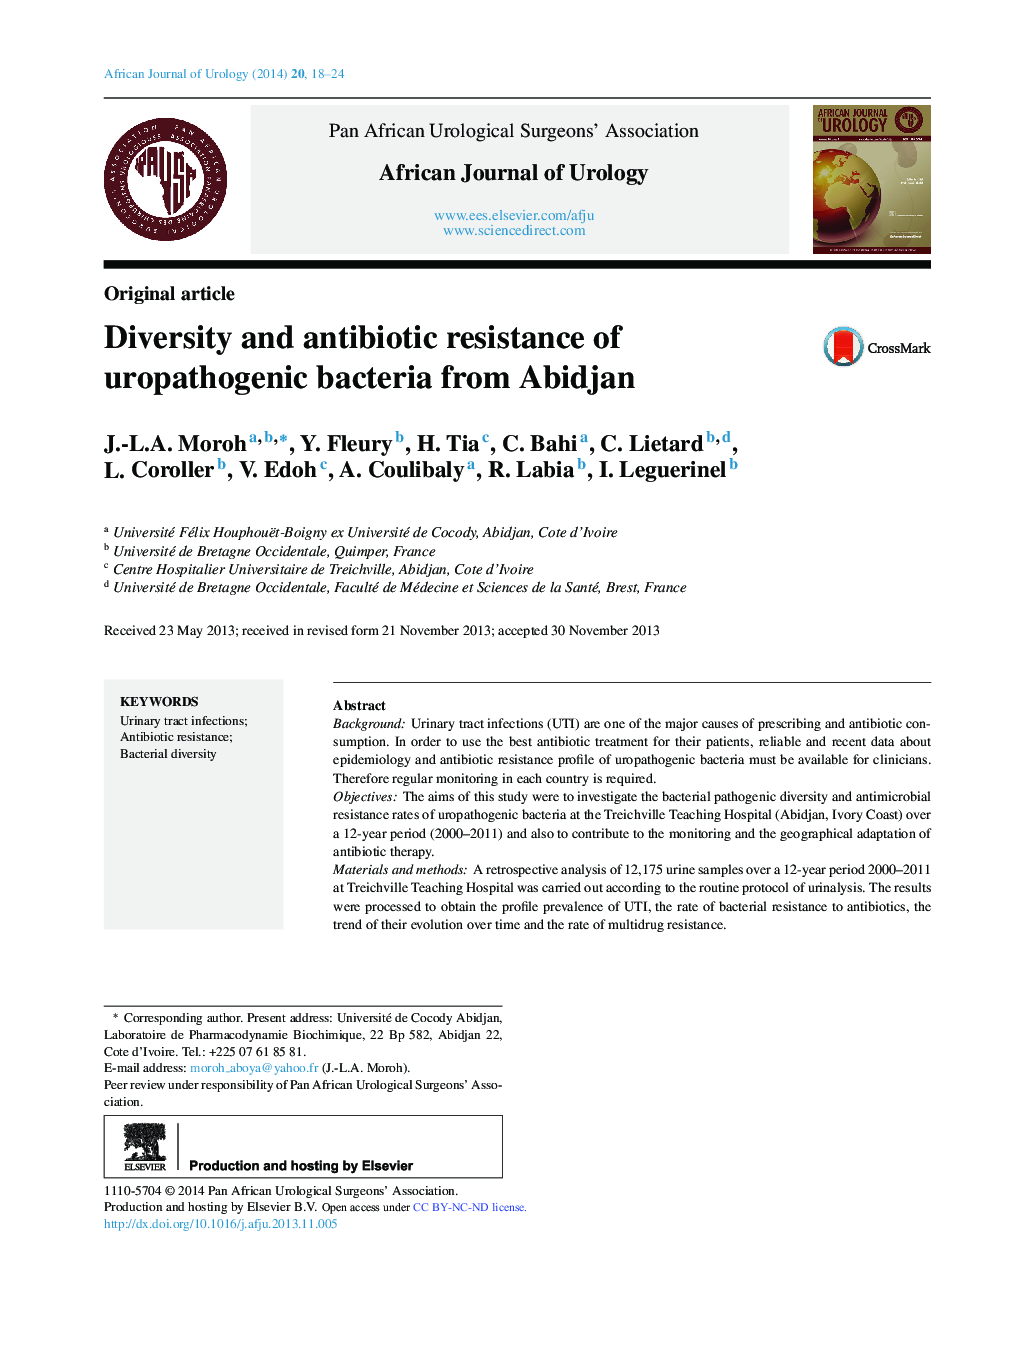 Diversity and antibiotic resistance of uropathogenic bacteria from Abidjan 